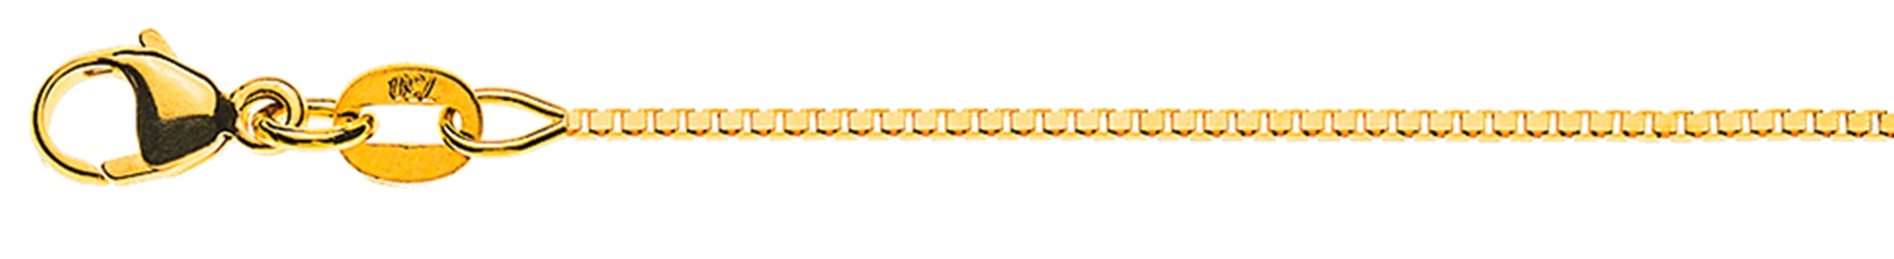 AURONOS Élégance Halskette Gelbgold 14K Venezianerkette diamantiert 40cm 0.9mm